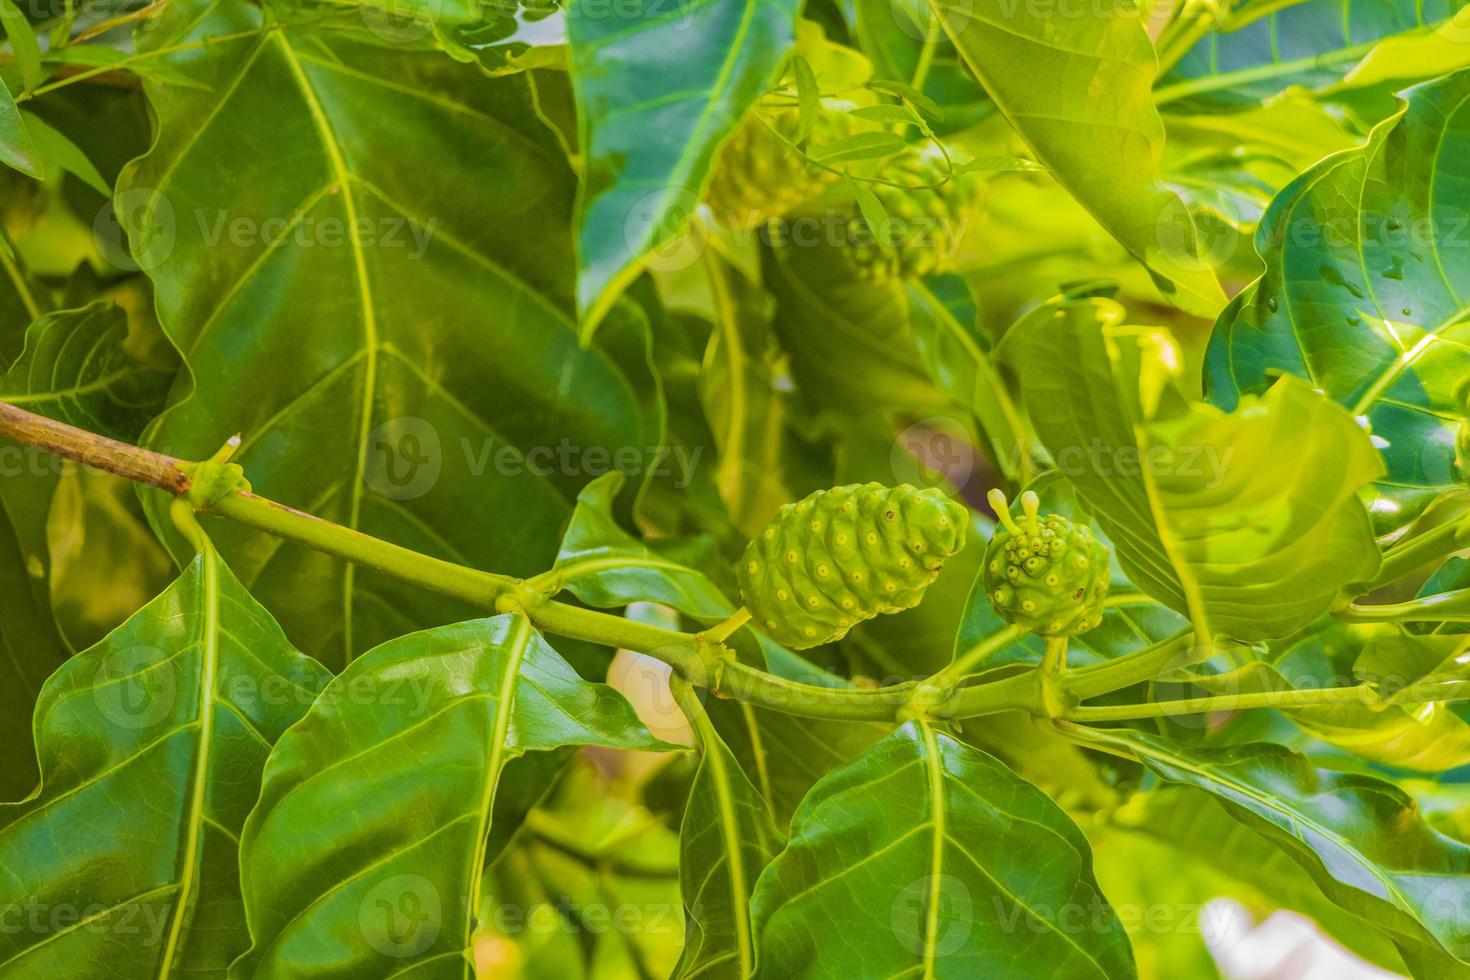 fruta noni amadurece no ramo koh samui island, na tailândia. foto